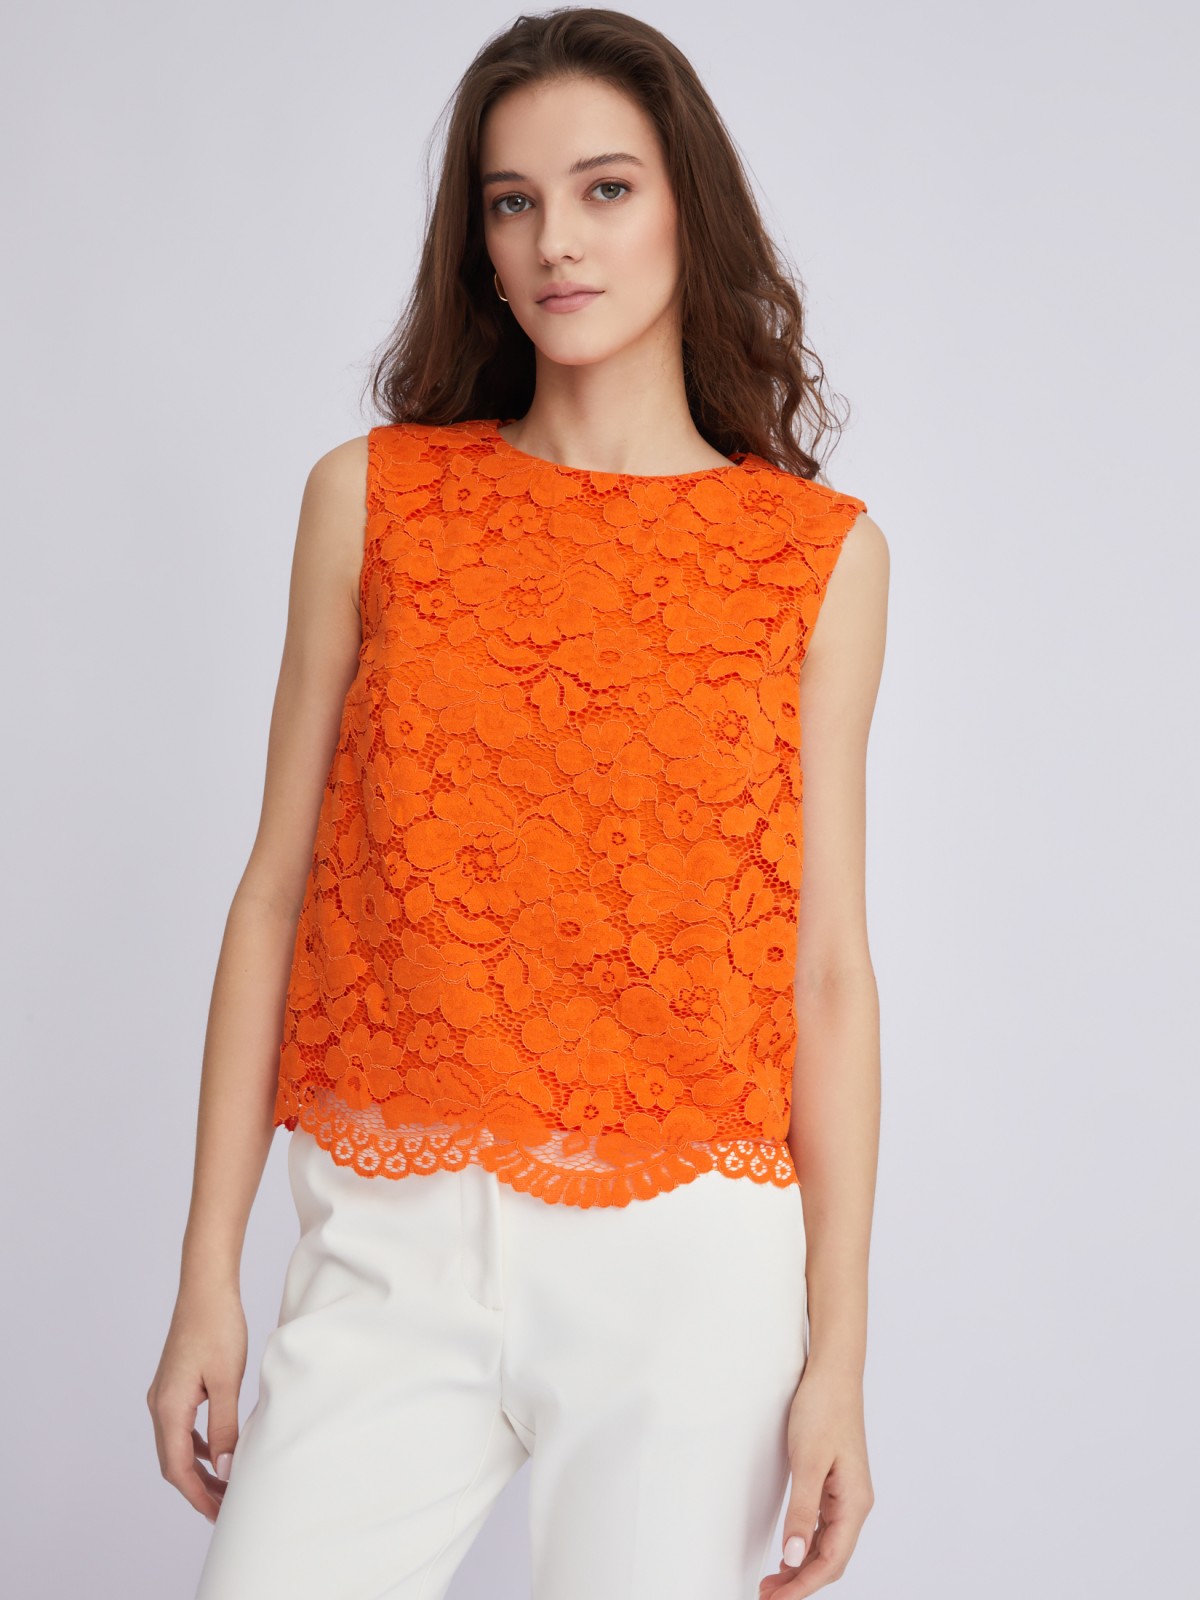 Кружевной топ-блузка без рукавов zolla 02324132L053, цвет оранжевый, размер XS - фото 3